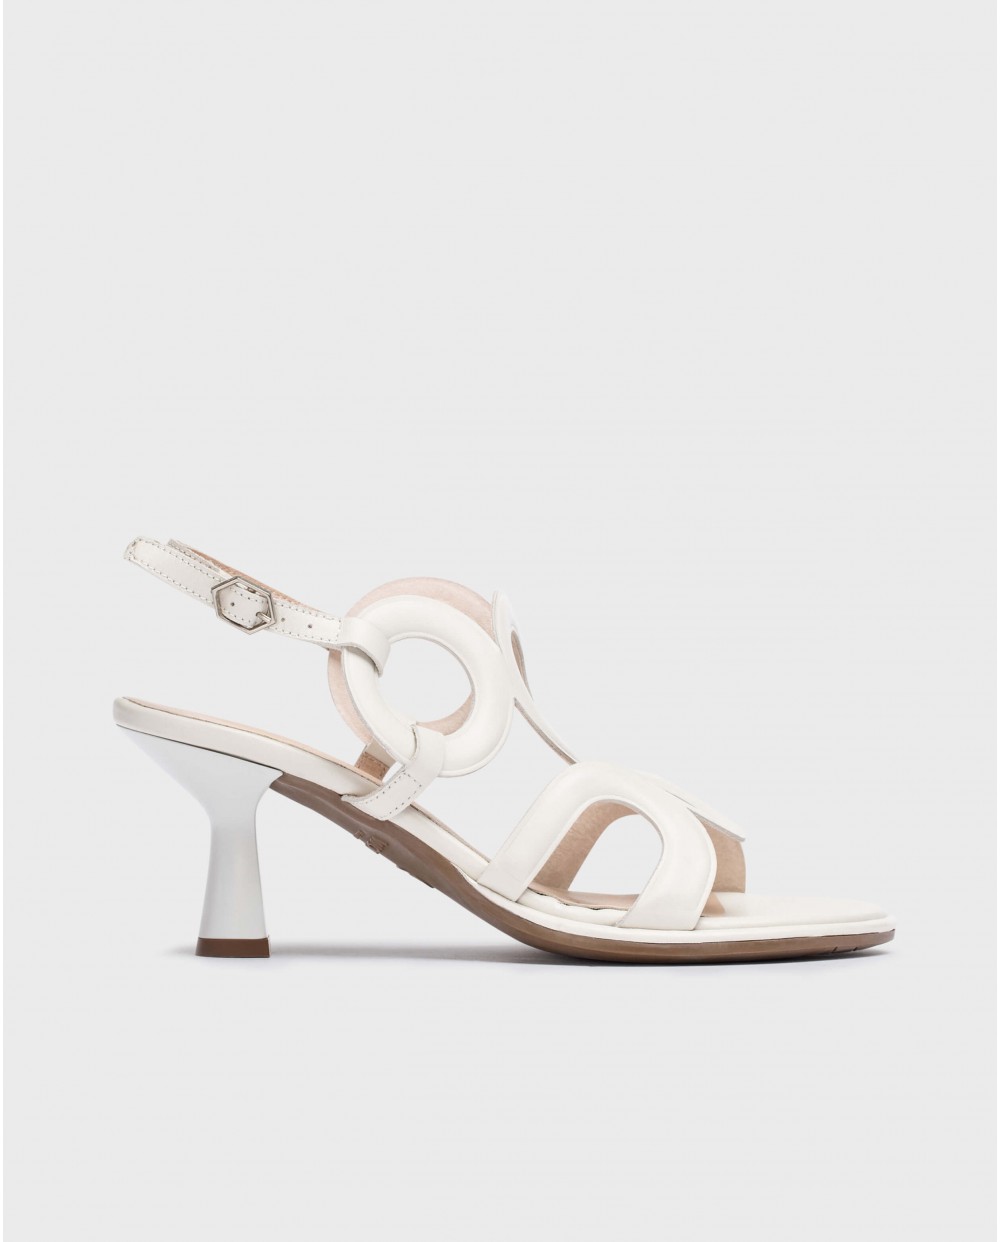 Wonders-Sandals-White Iris heeled sandals